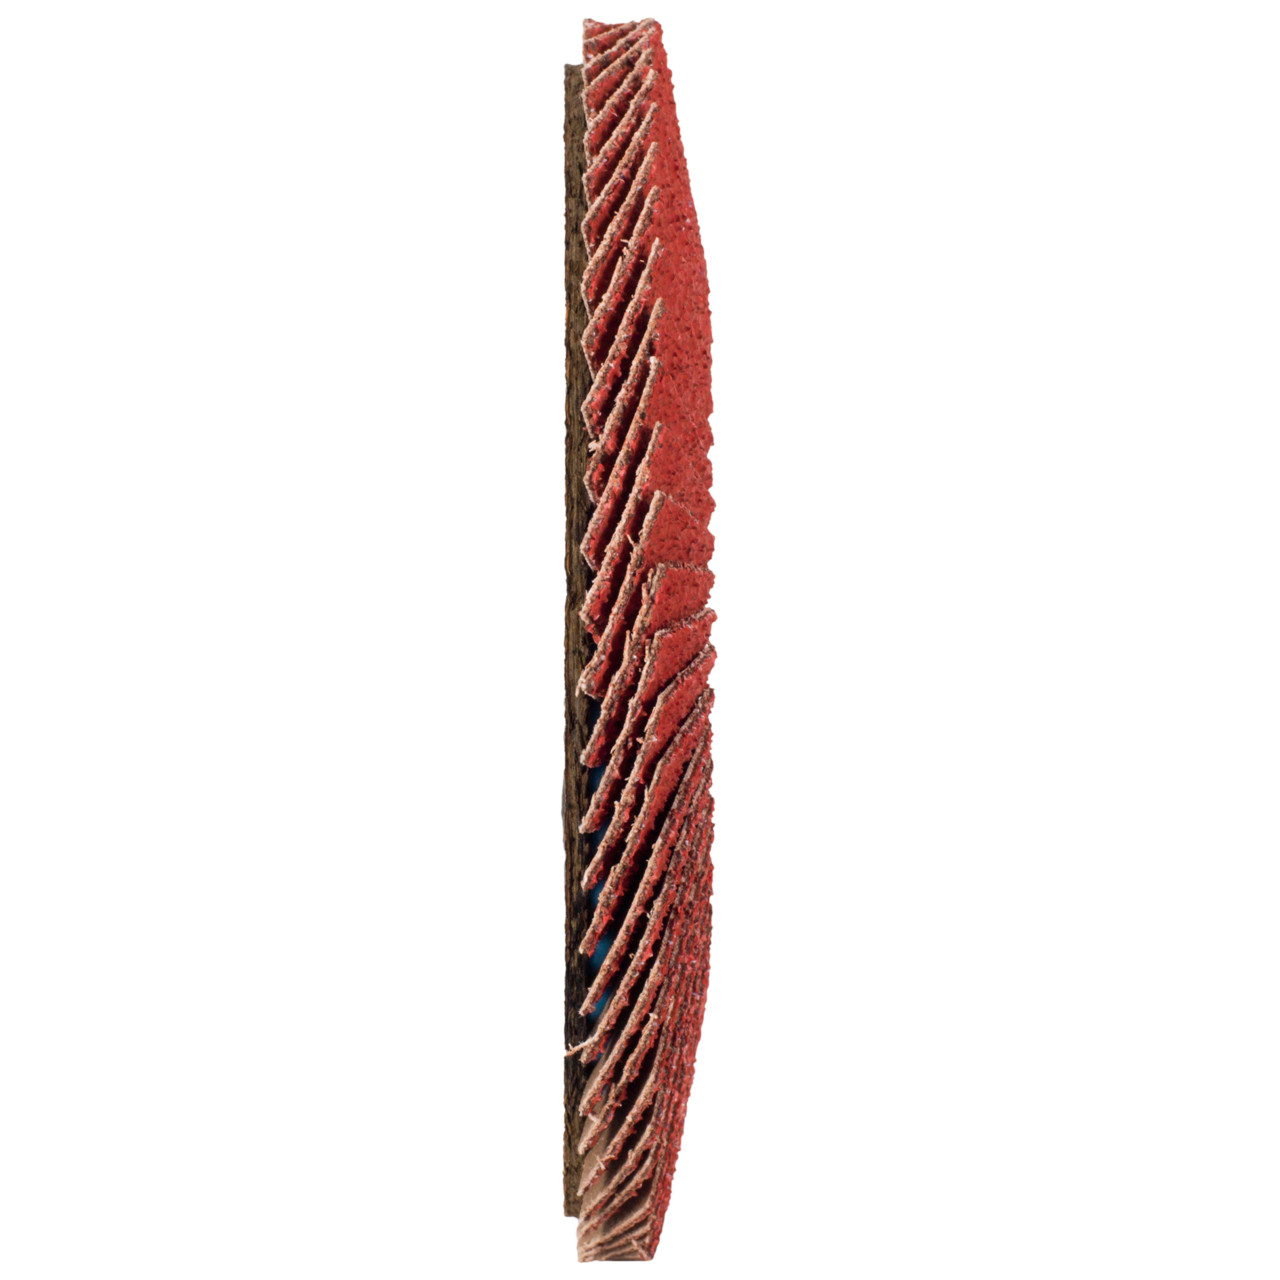 Tyrolit Gekartelde borgring DxH 115x22,23 CERABOND gekartelde borgring voor roestvrij staal, P80, vorm: 27A - geslingerde versie (glasvezeldragerhuisversie), Art. 34165680